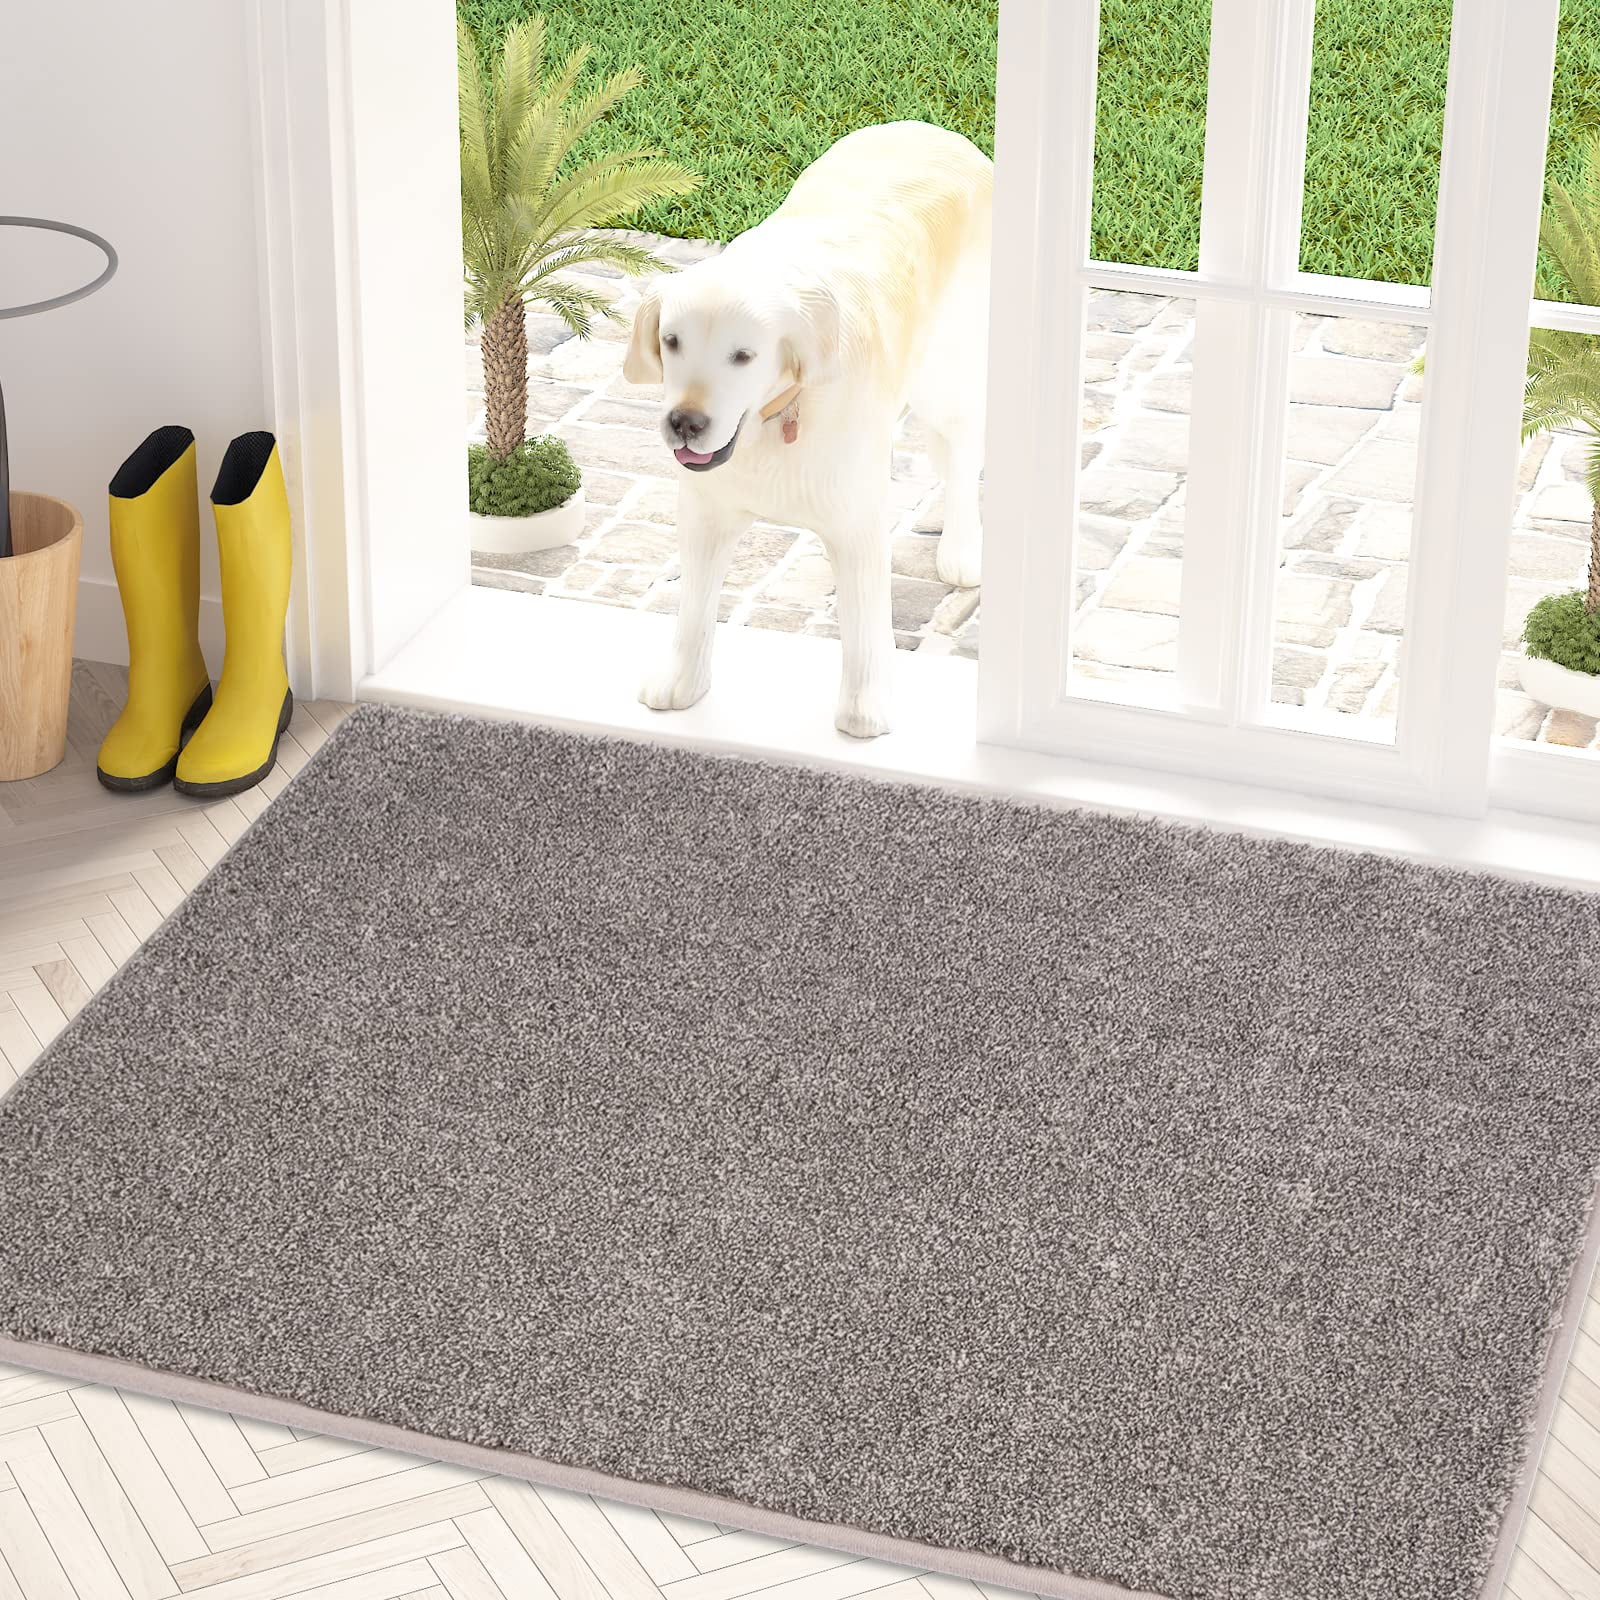 PURRUGS Dirt Trapper Door mat 33.5 x 59, Non-Skid/Slip Machine Washable  Microfiber Entryway Rug, Dog Door Mat, Super Absorbent Welcome mat for  Muddy